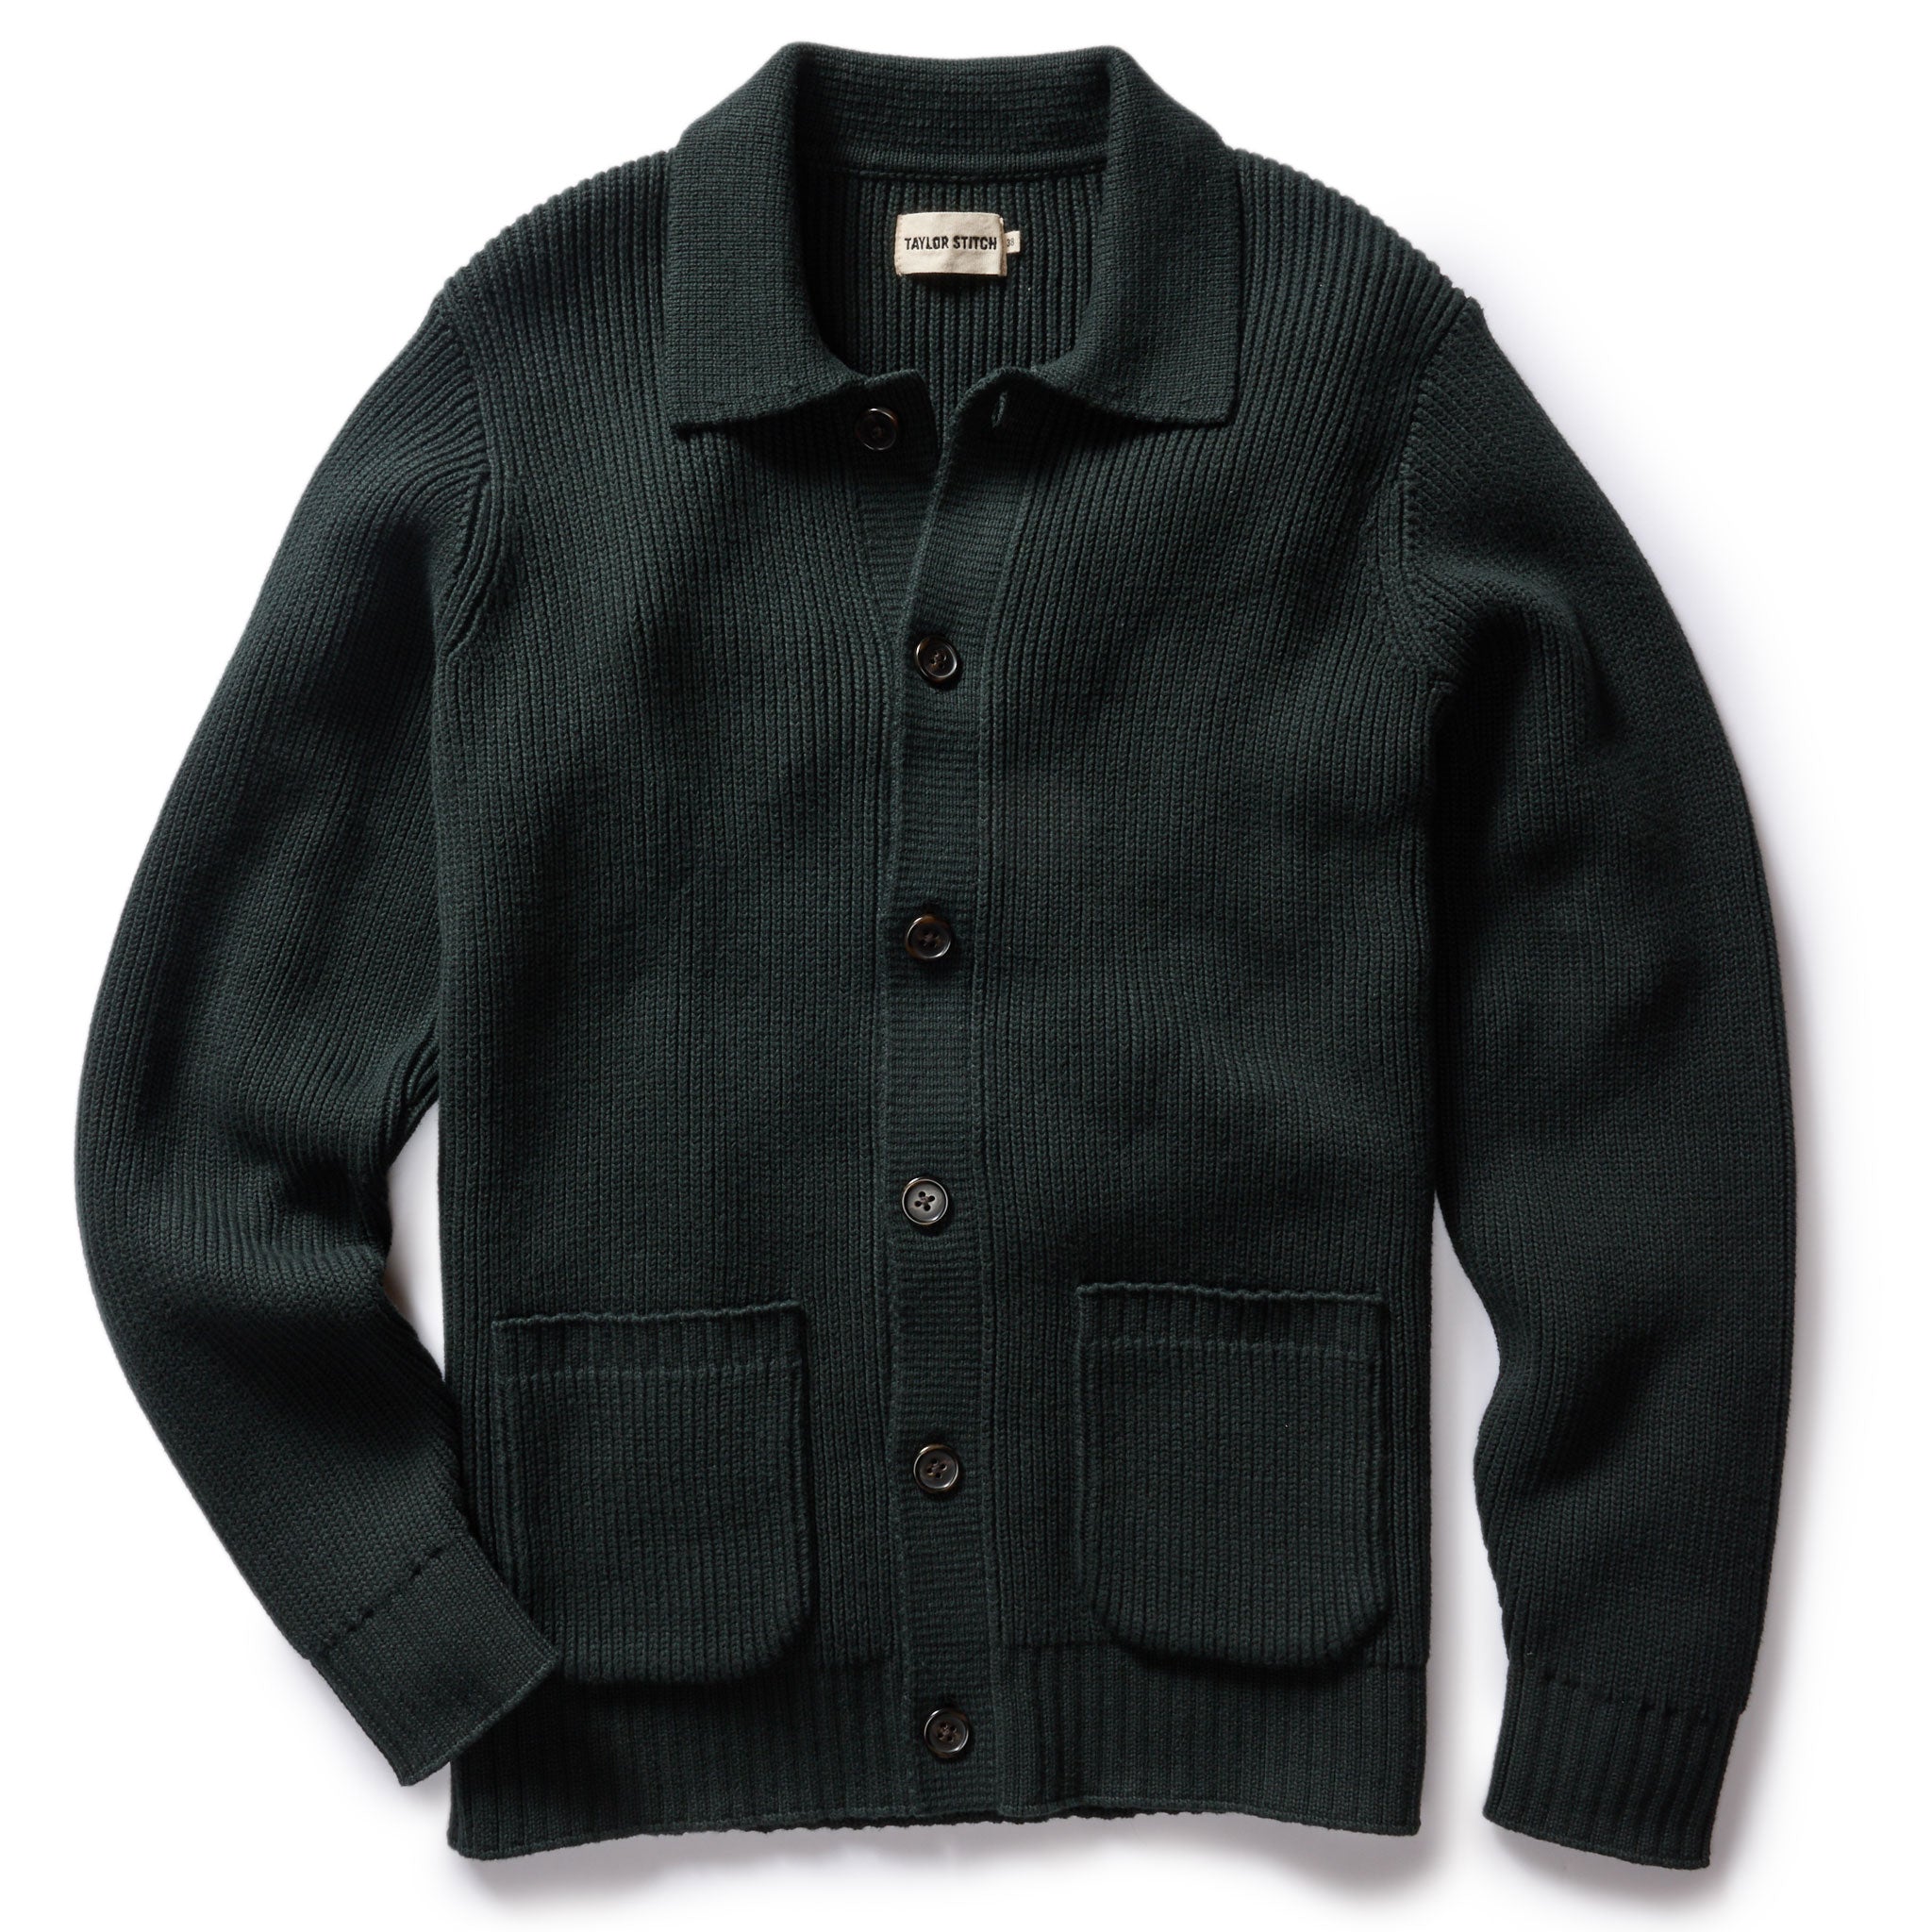 The Harbor Sweater Jacket in Black Pine Heather